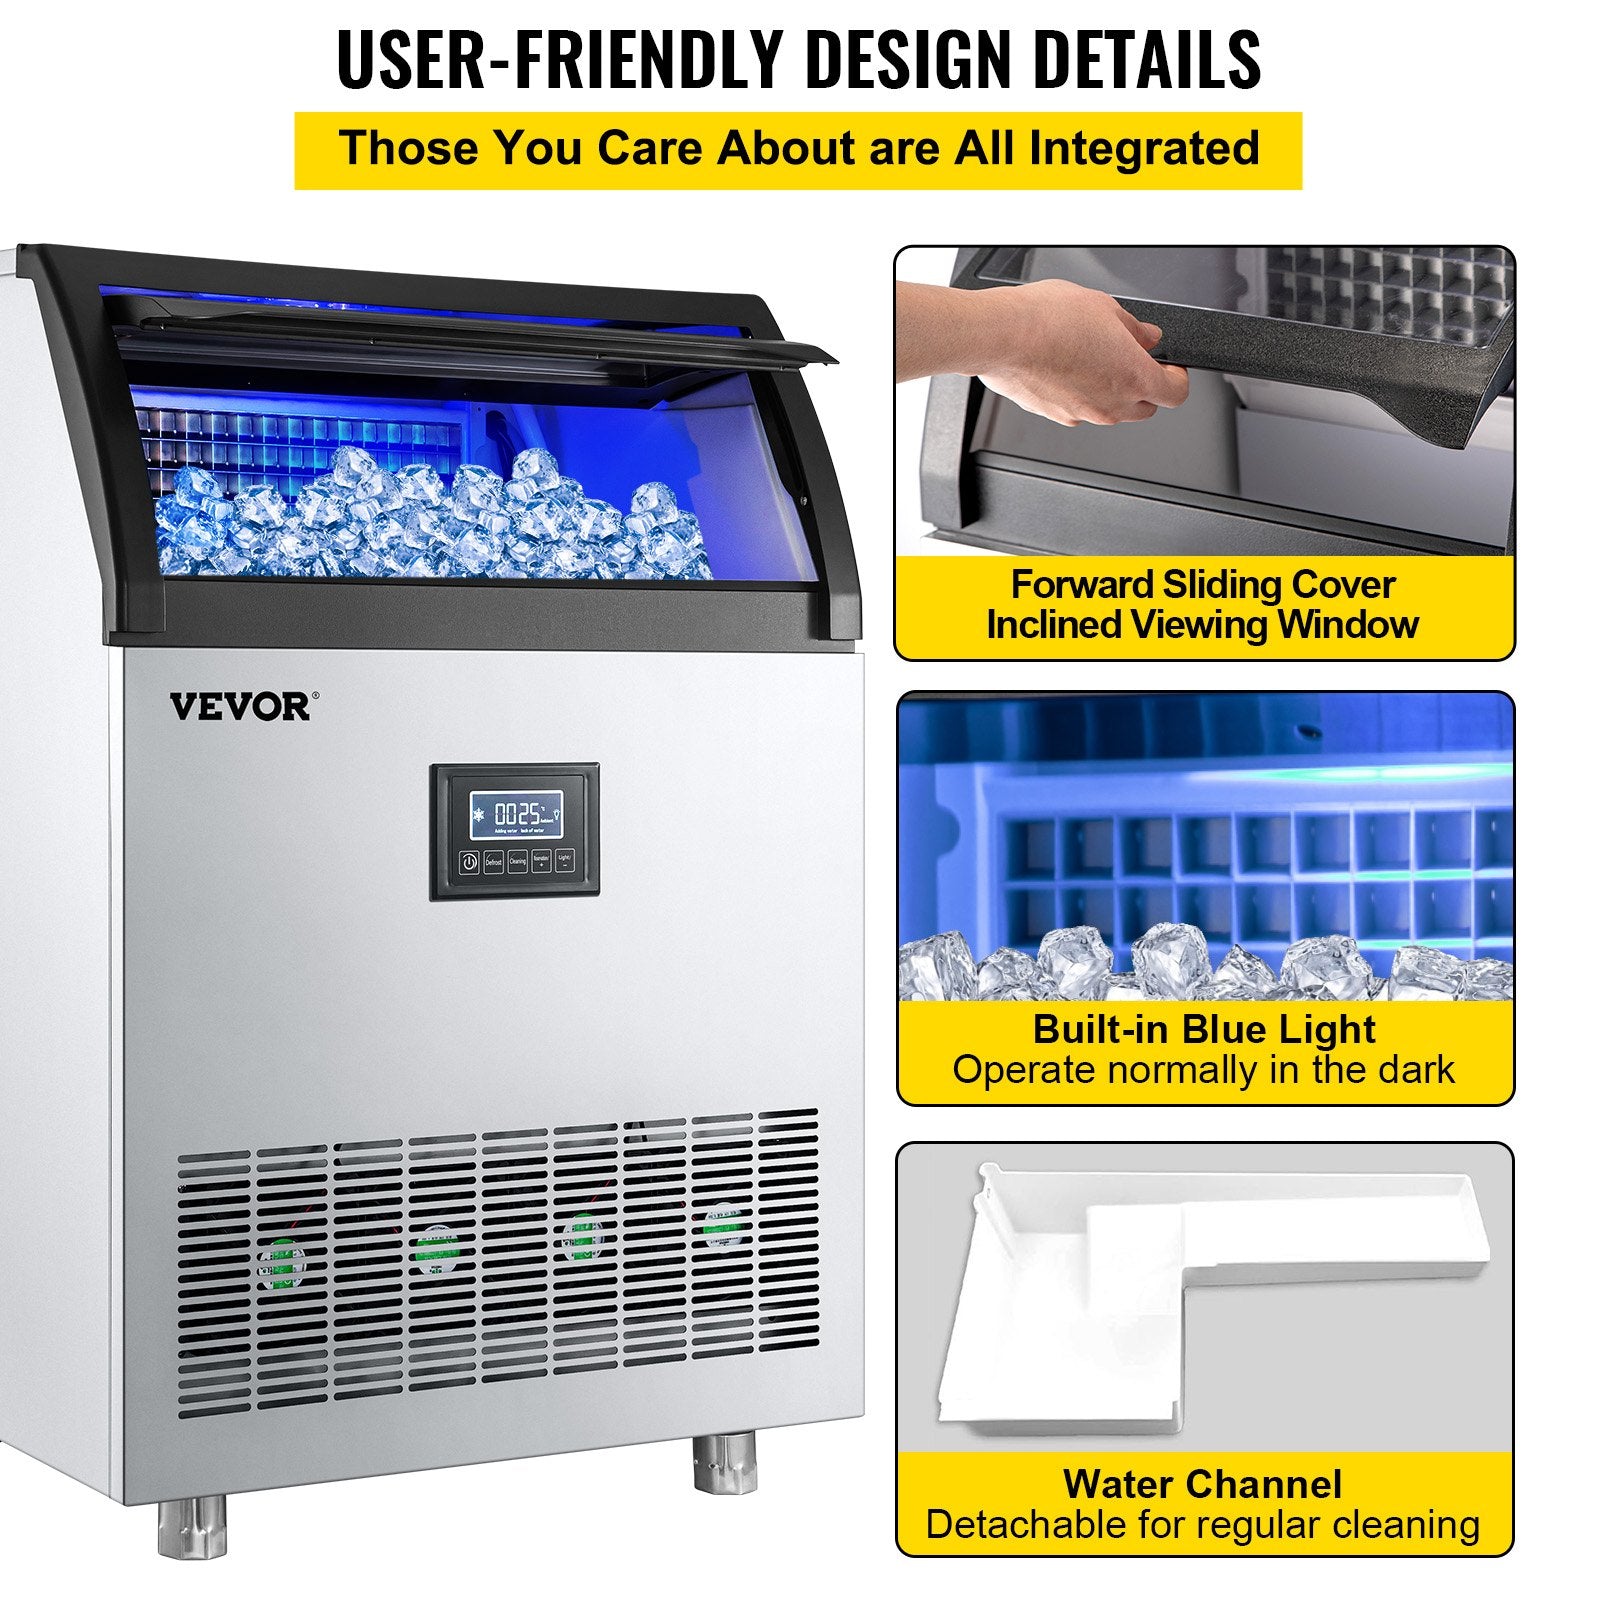 VEVOR 110V Commercial Ice Maker Machine 265LBS/24H, 750W Stainless Steel - $505